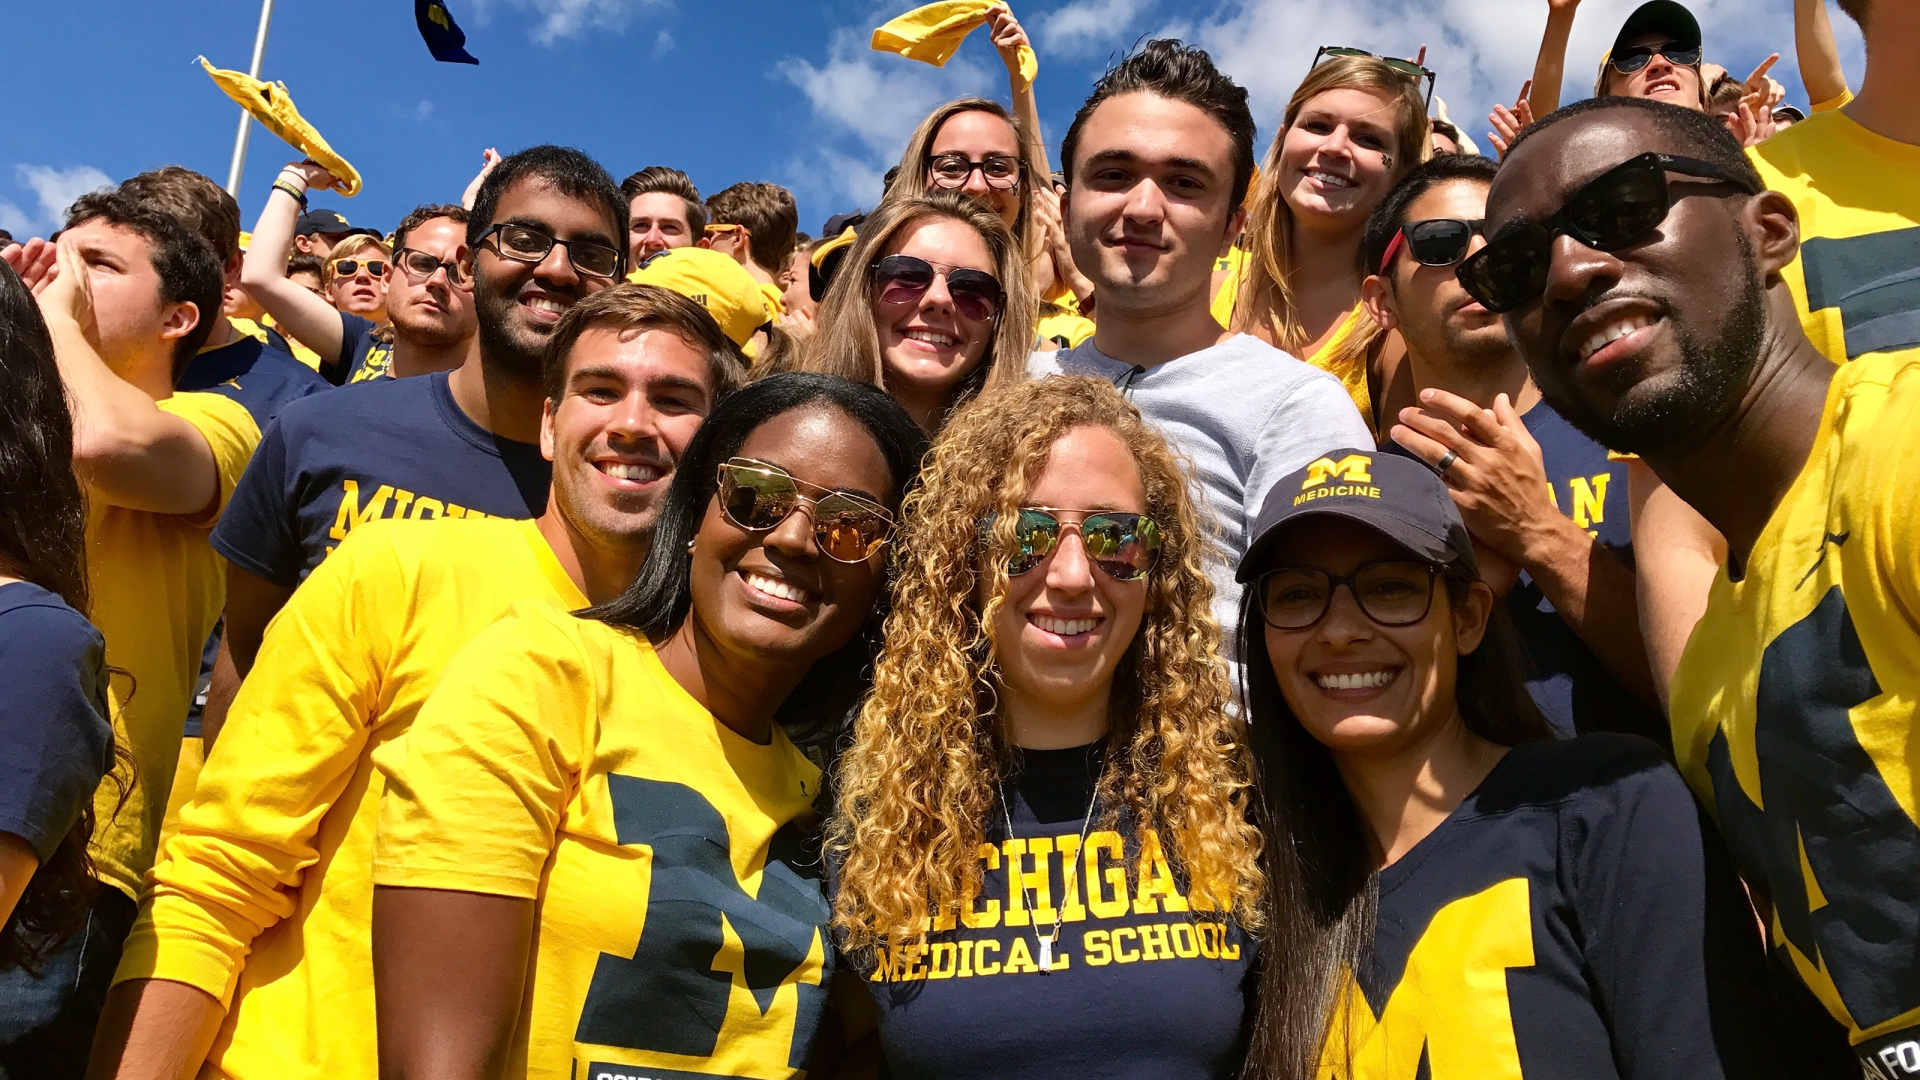 Students celebrating at a Michigan game